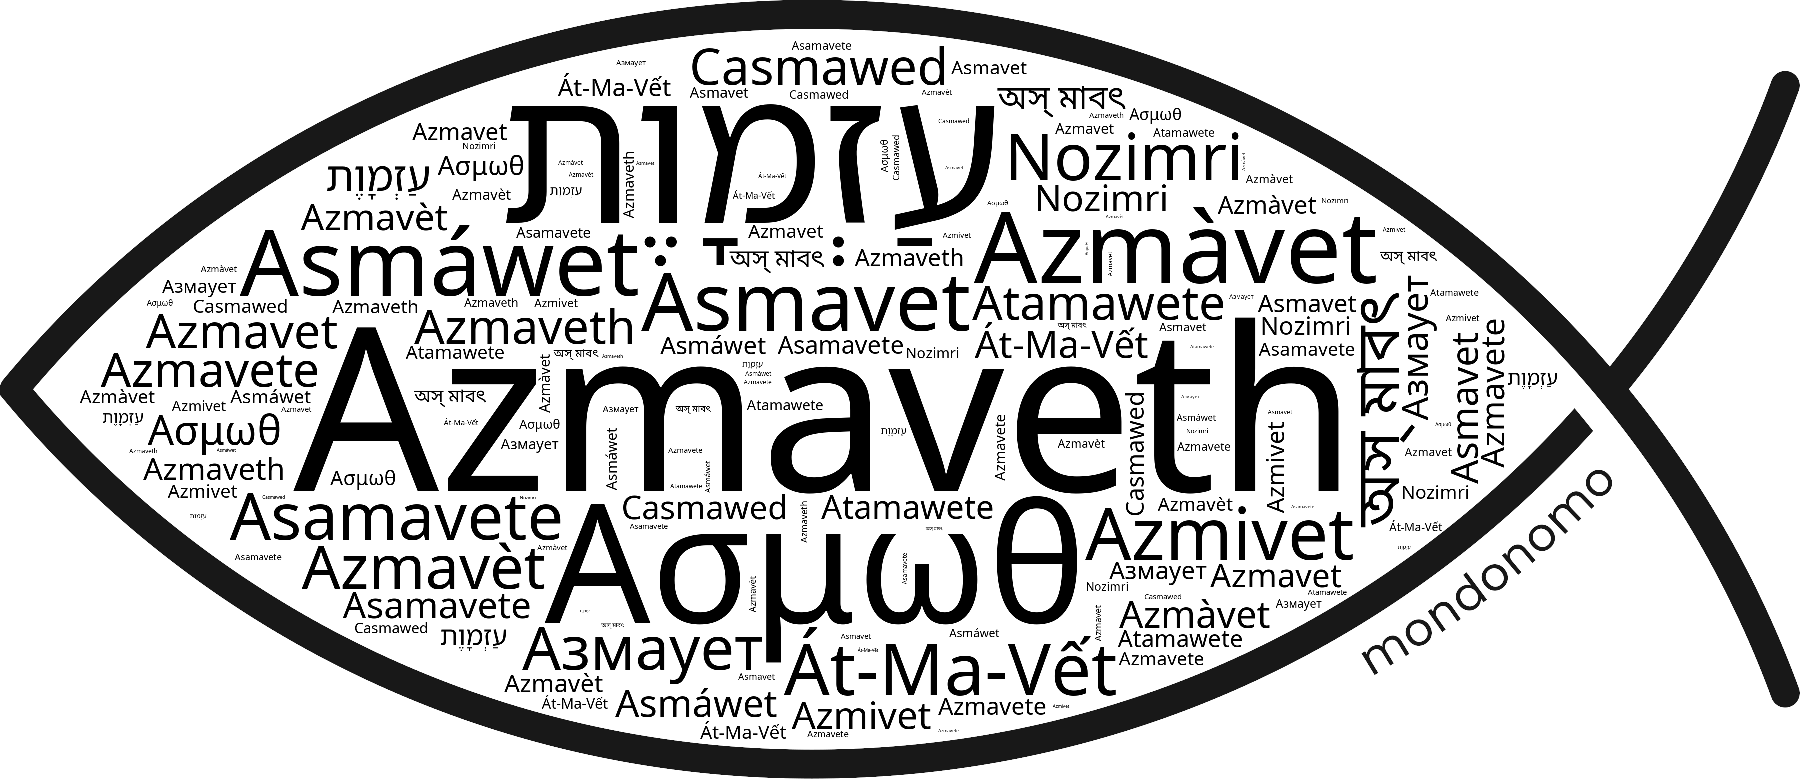 Name Azmaveth in the world's Bibles